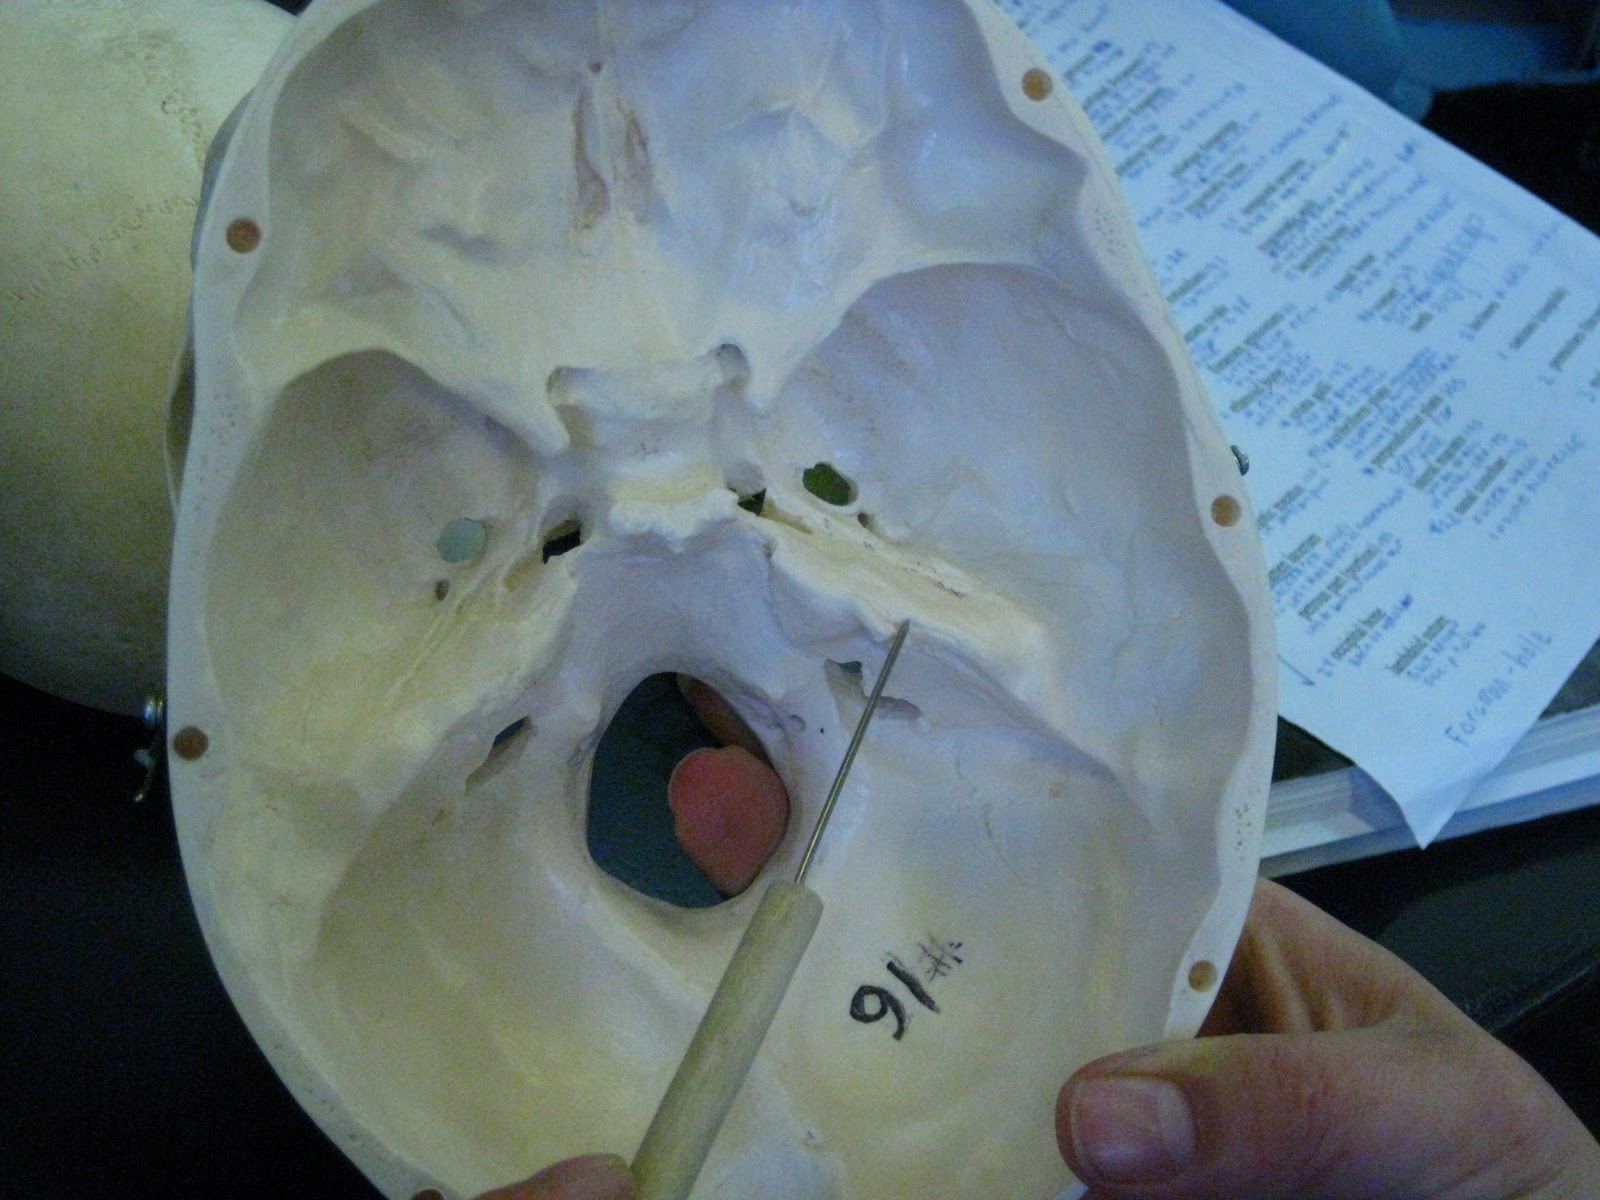 Boned: Human Skull - petrous part (of temporal bone)